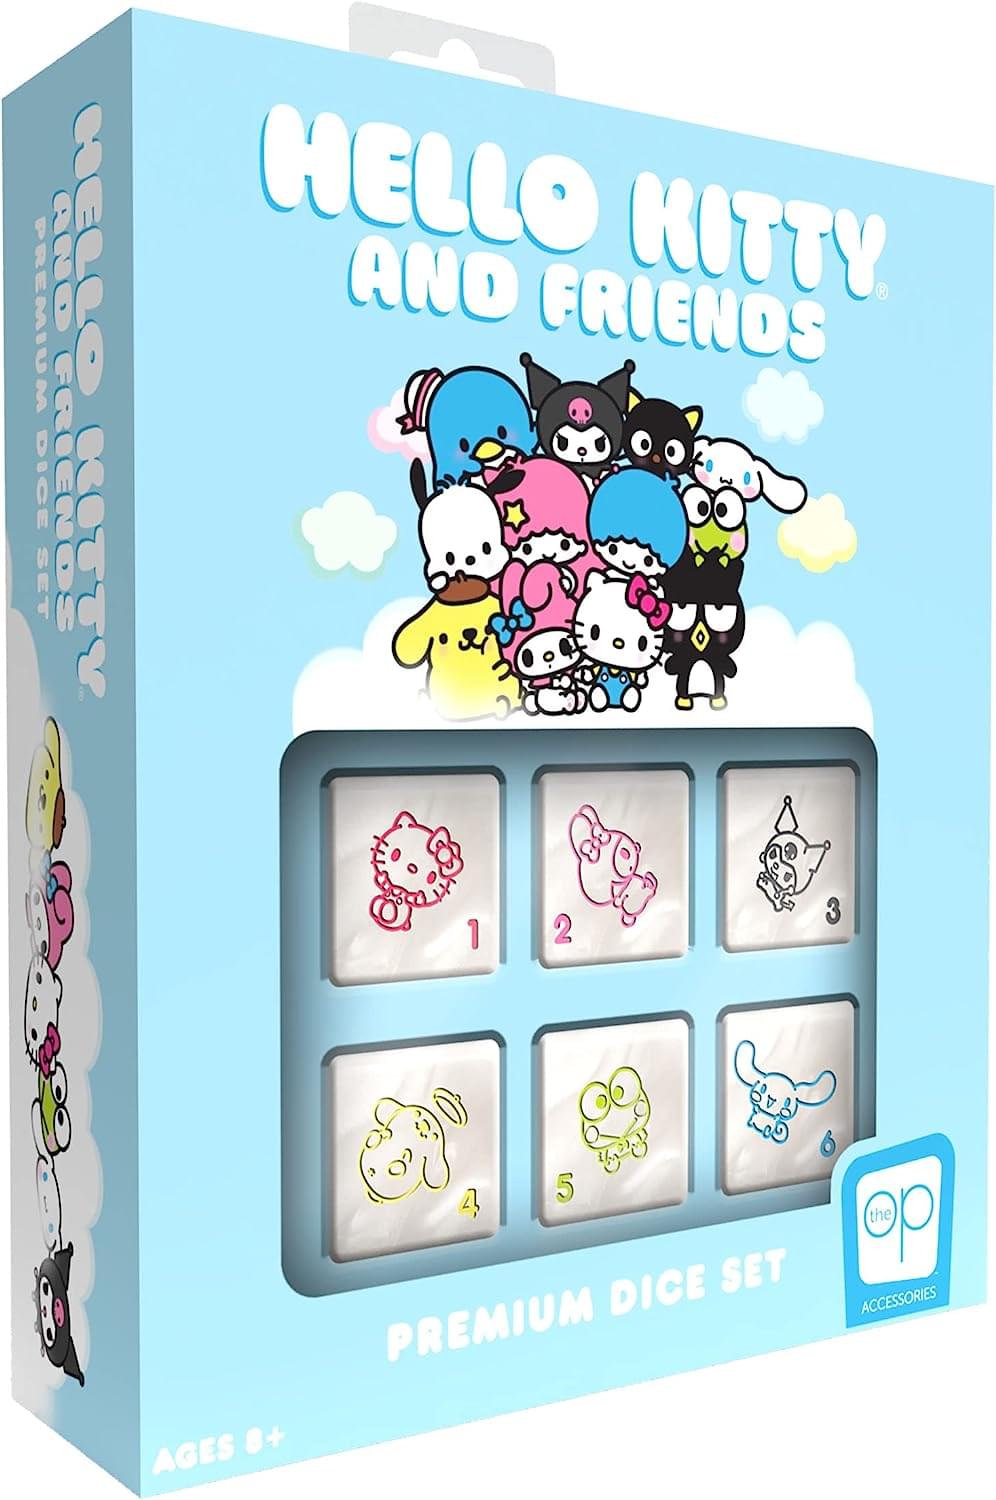 Sanrio Hello Kitty and Friends Premium Game Dice